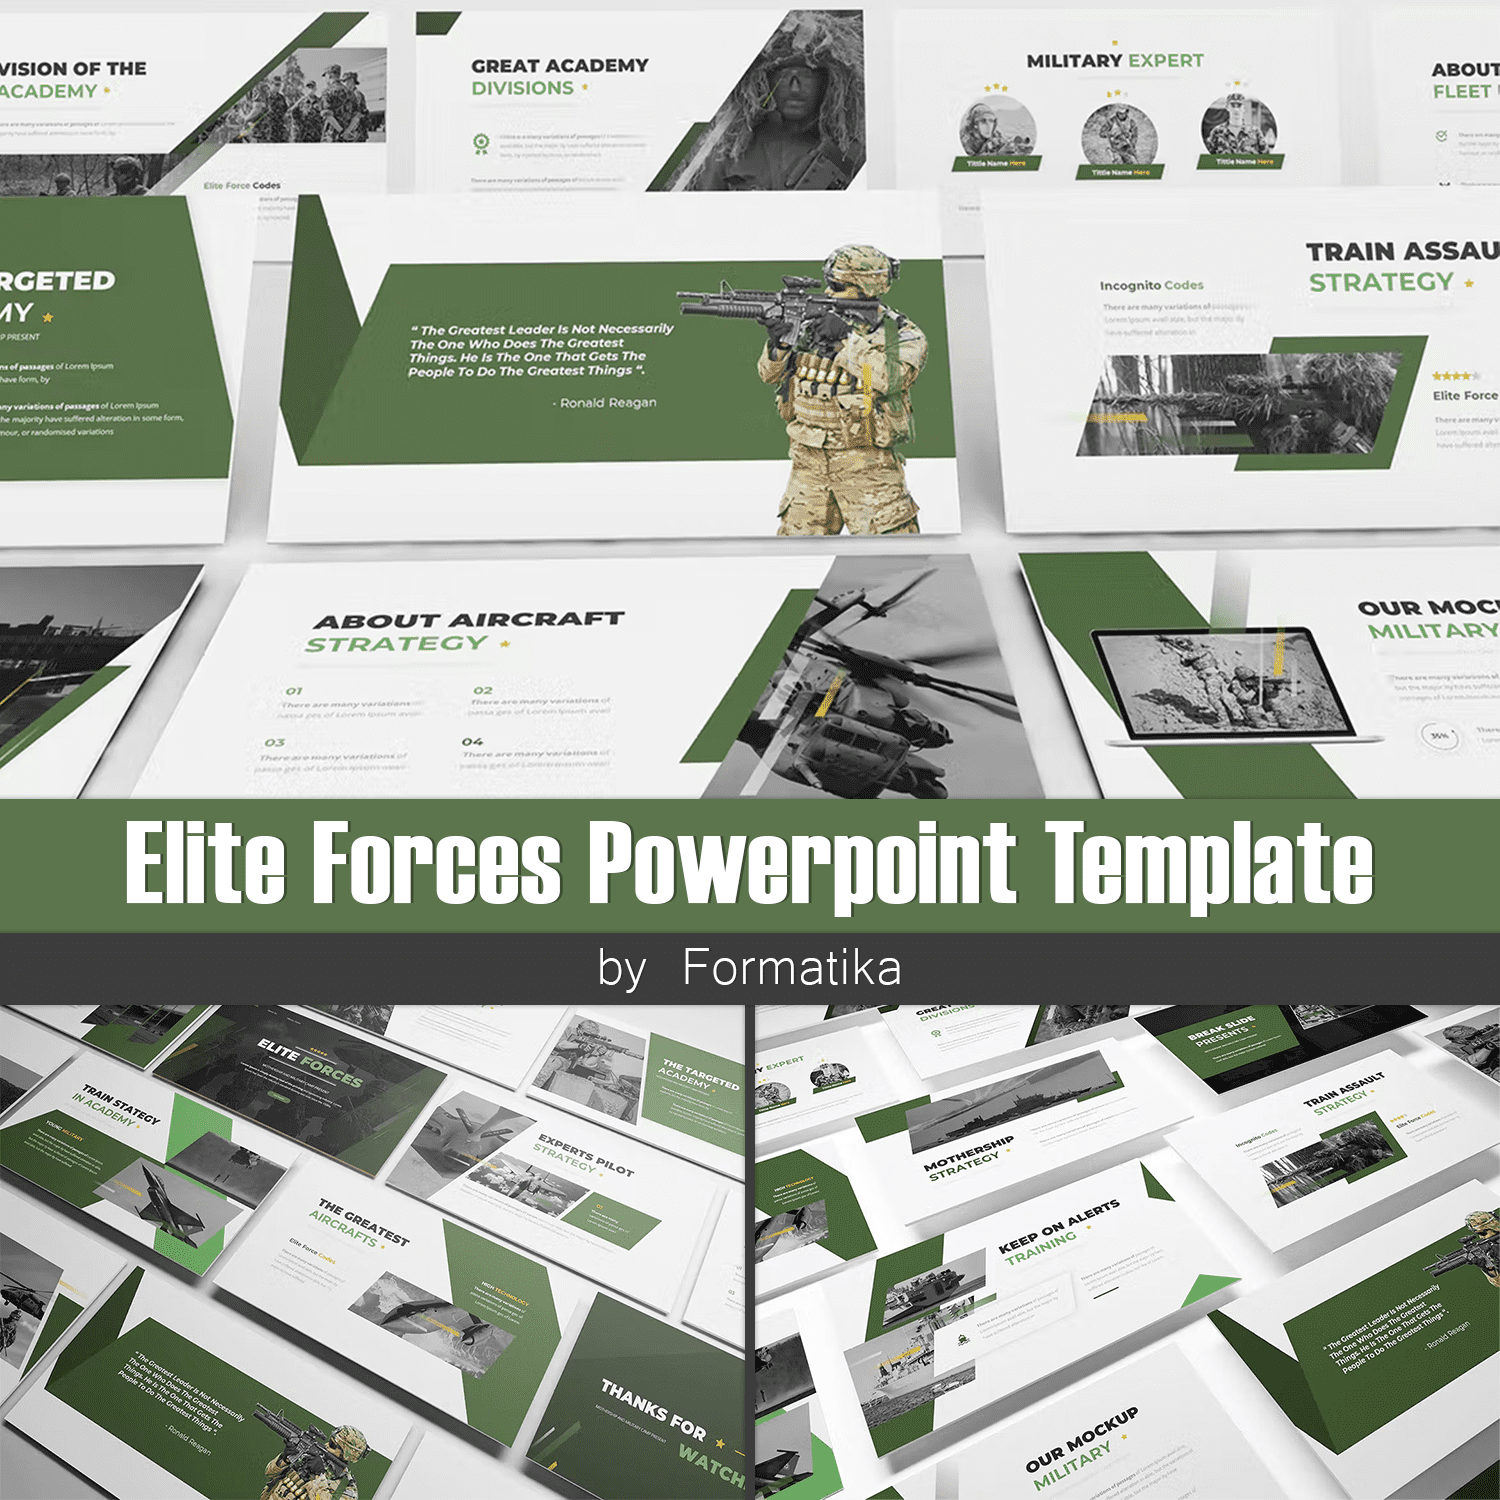 Elite Forces Power Template.